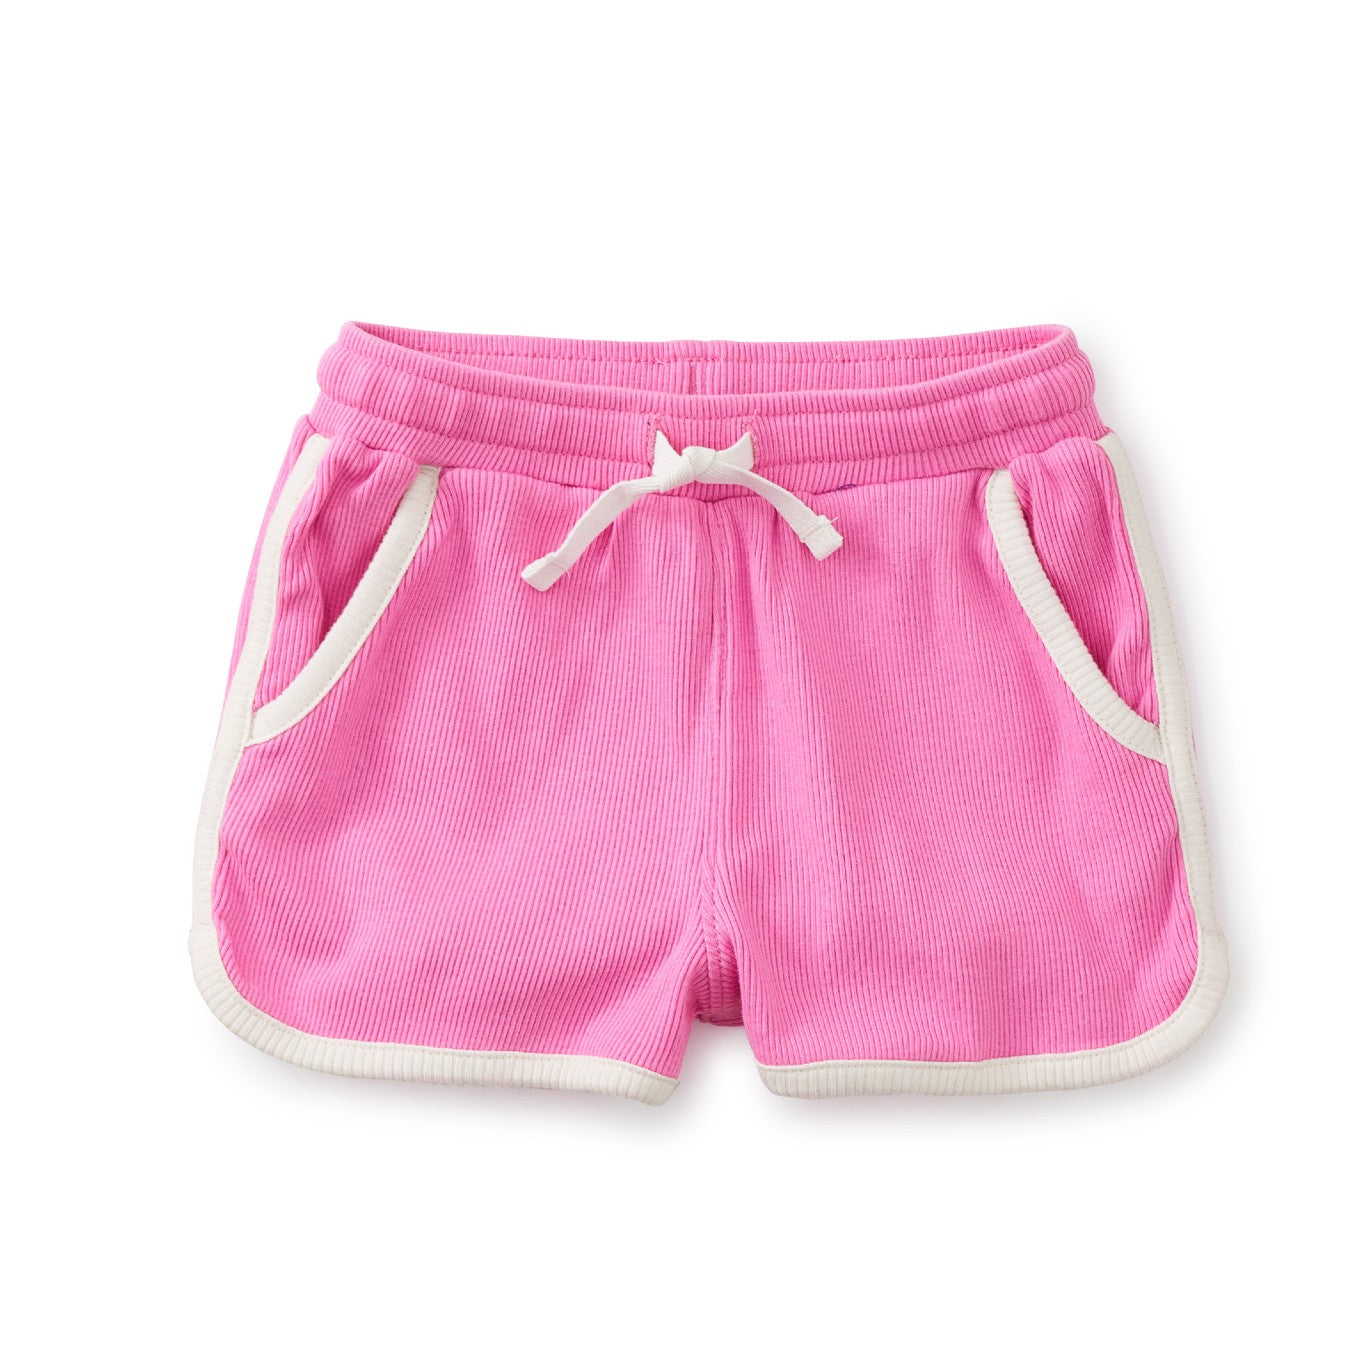 Piped Gym Shorts: Perennial Pink